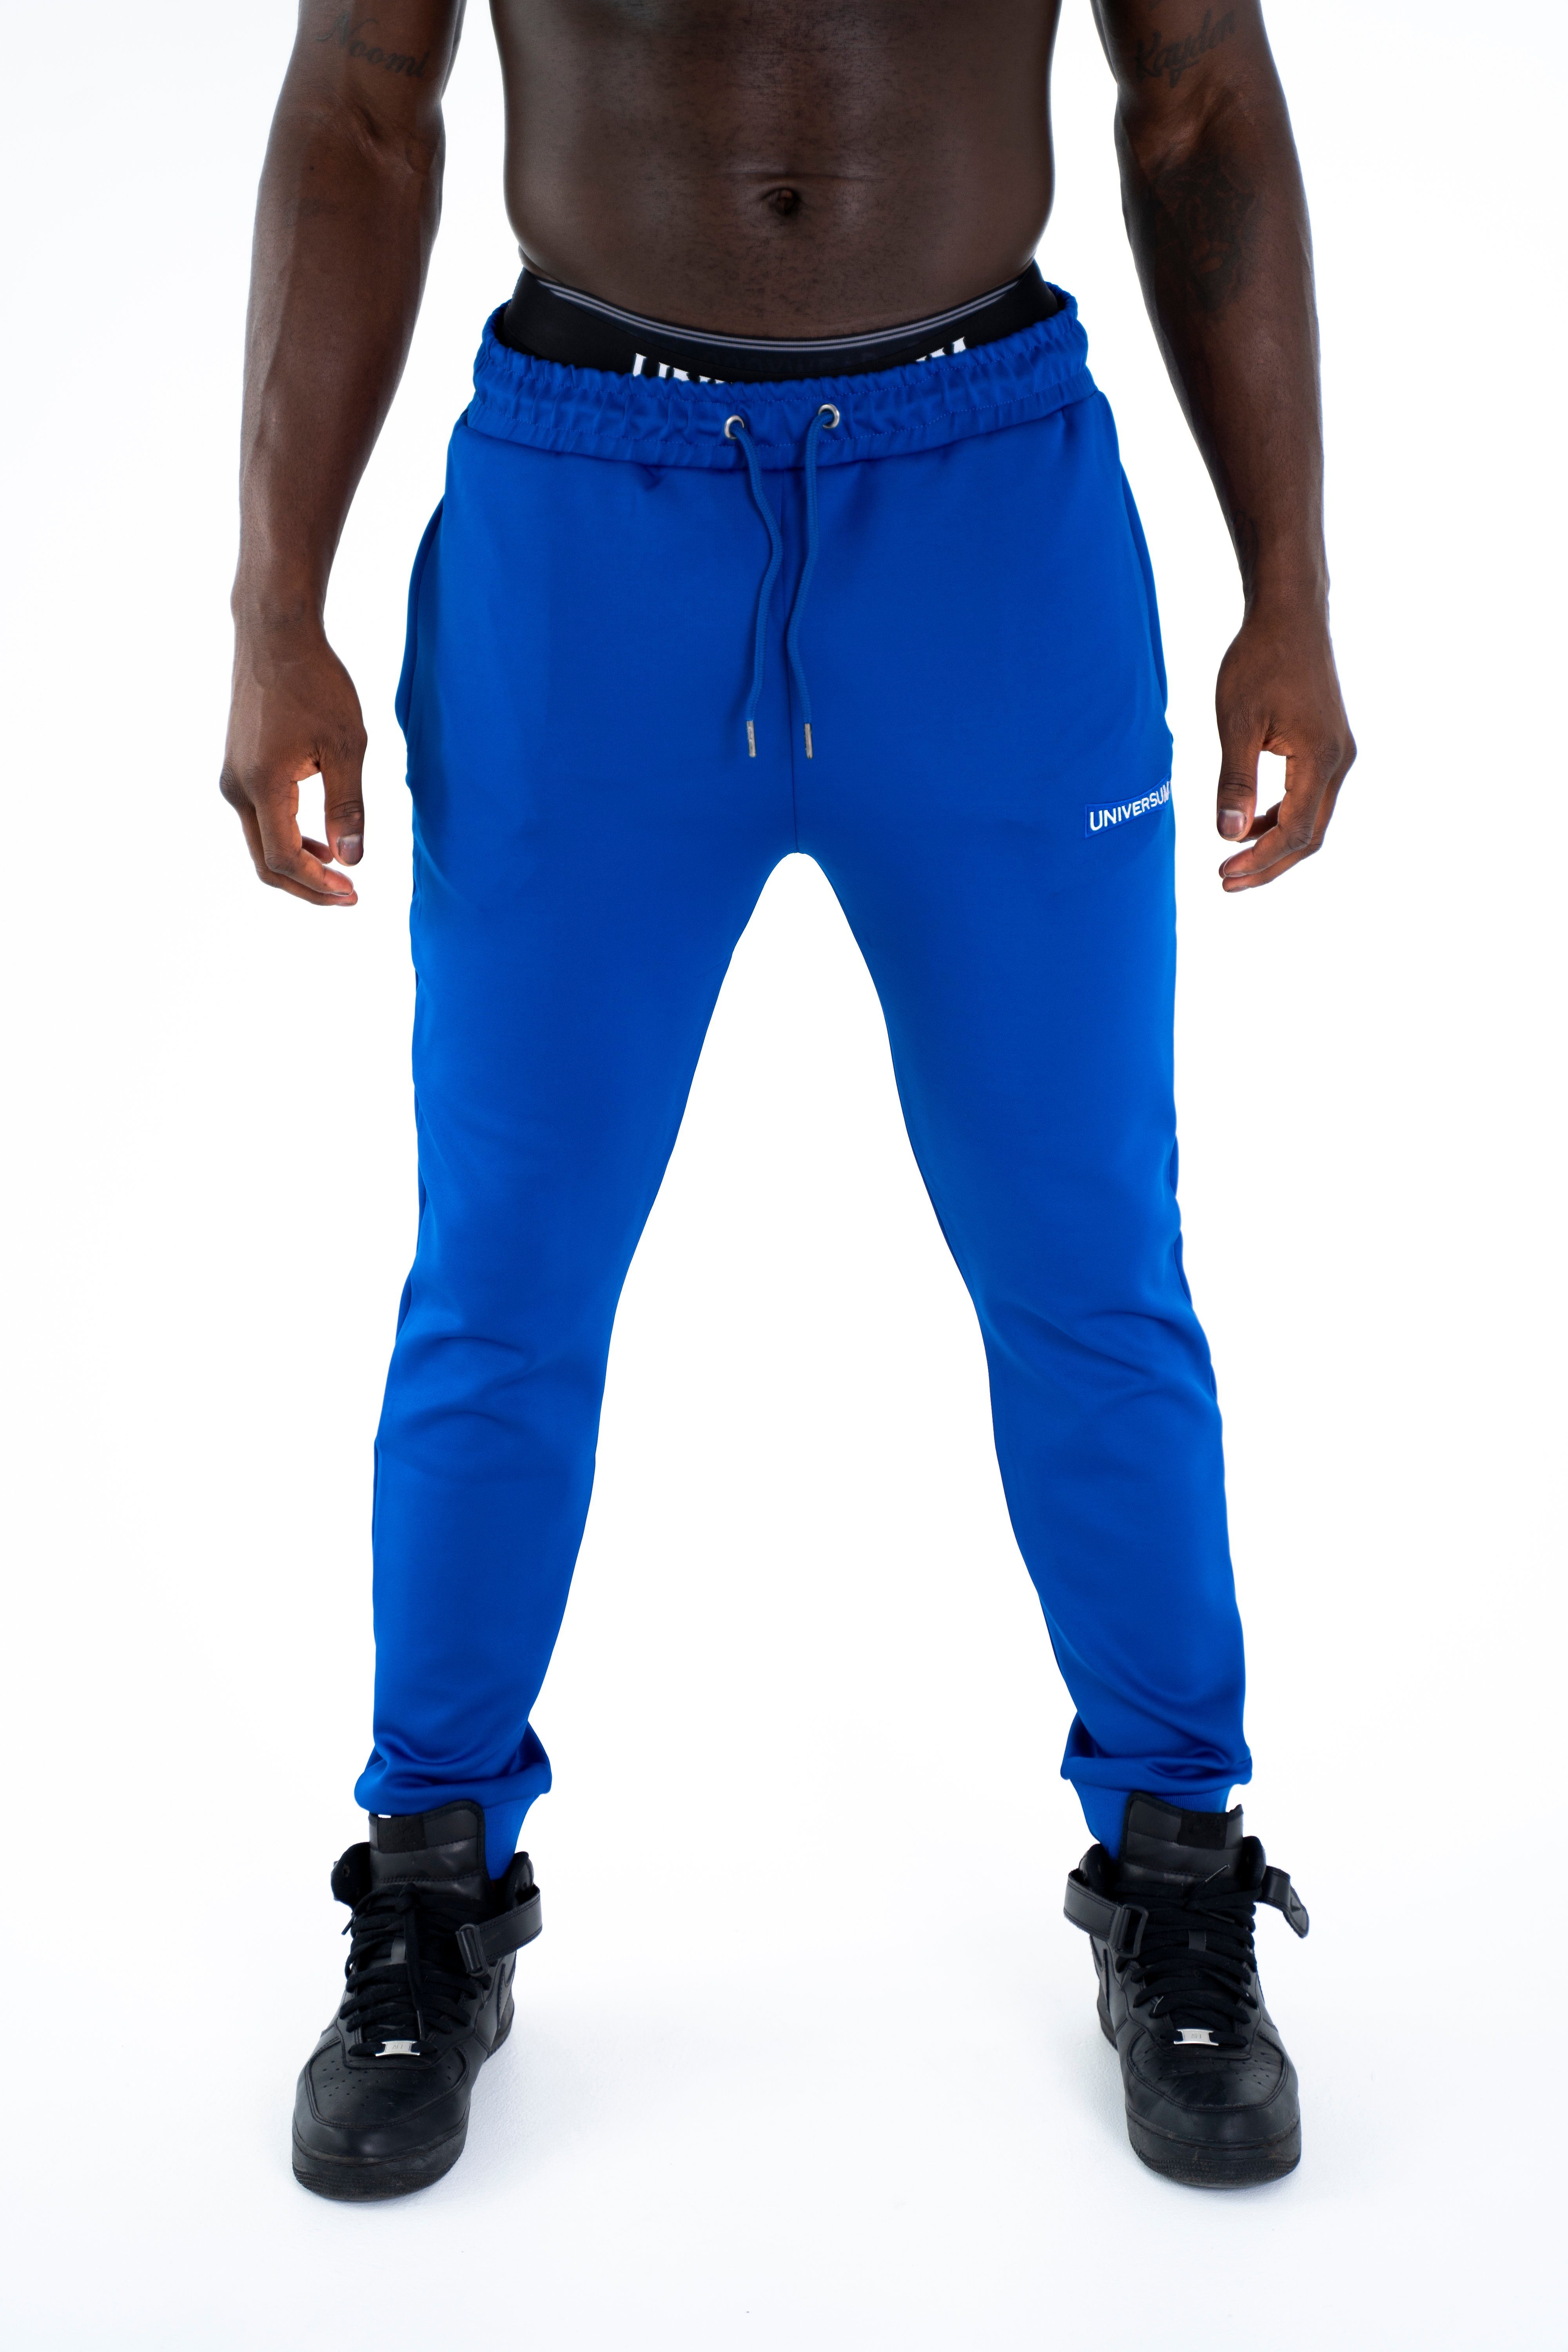 Universum Sportwear Jogginghose Fit Pants blau Jogginghose Freizeit für Fitness Modern und Sport